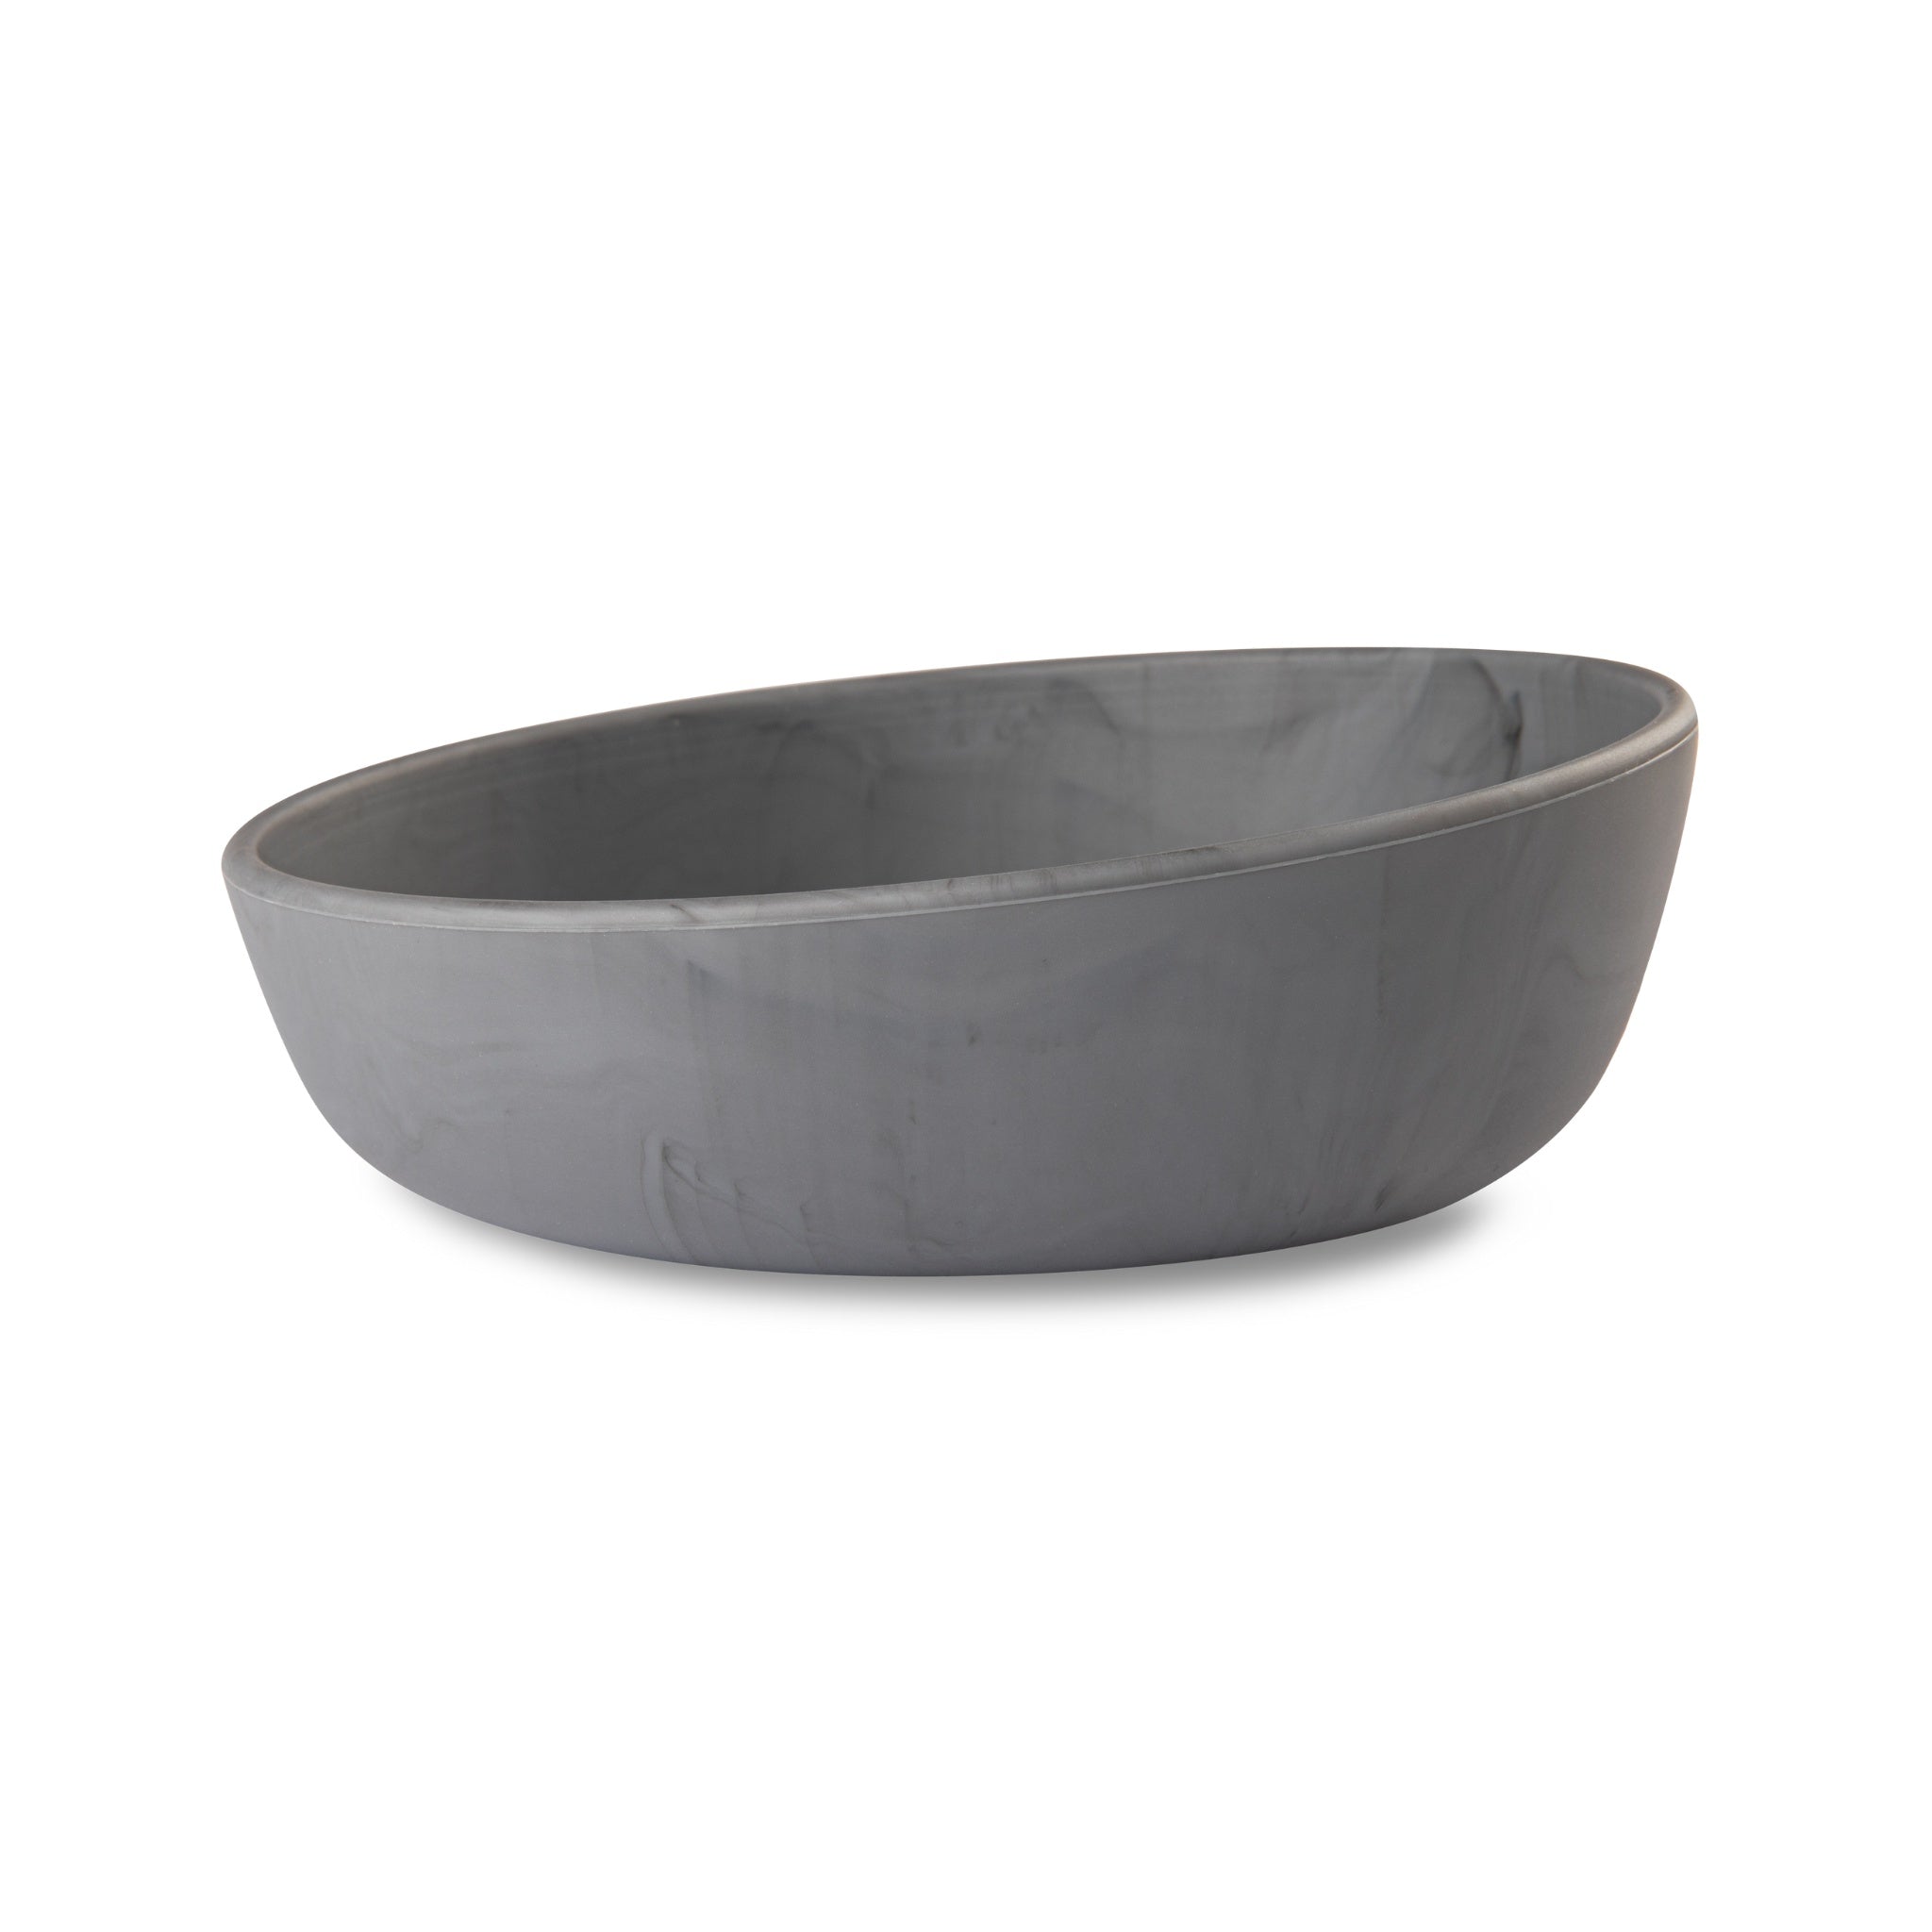 *eeveve* Silicone Bowl large シリコンボウル L - Marble - Granite Gray